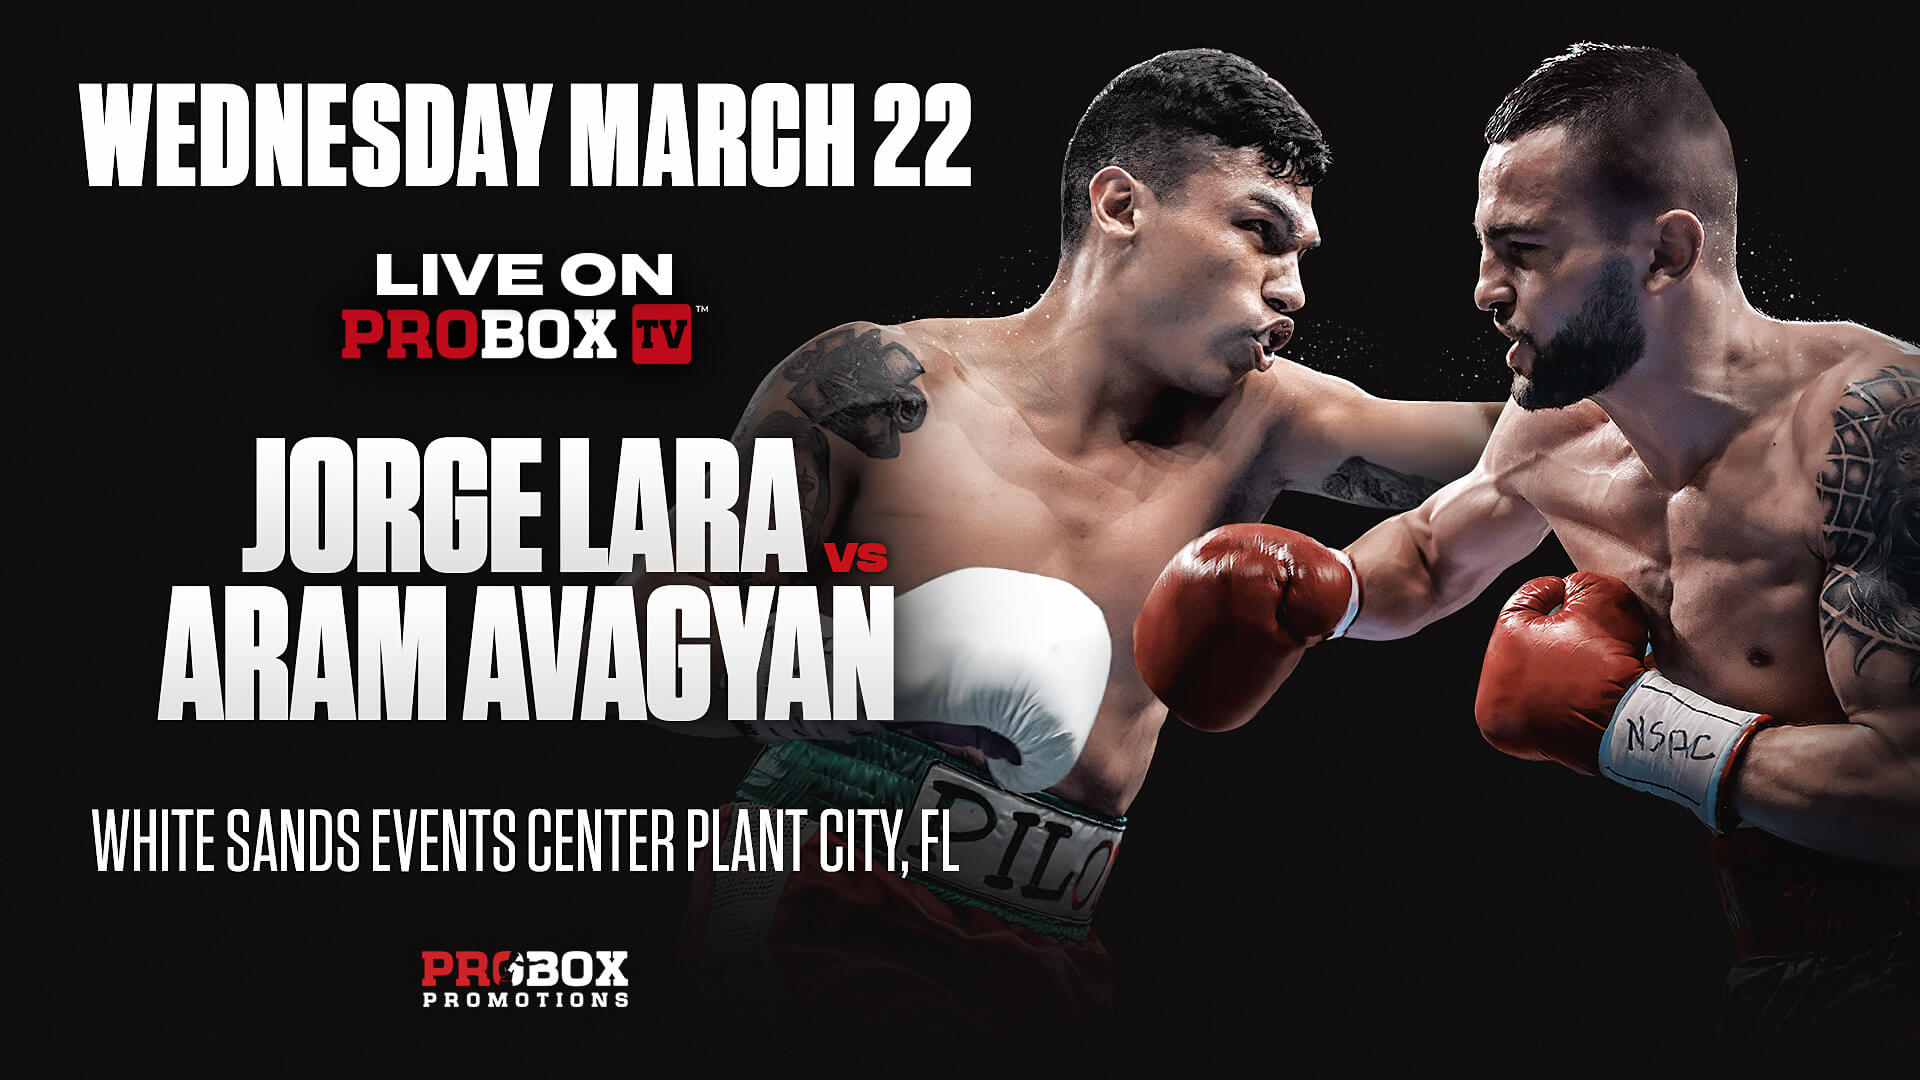 Jorge Lara VS Aram Avagyan, March 22, WhiteSands Event Center, Plant City, FL